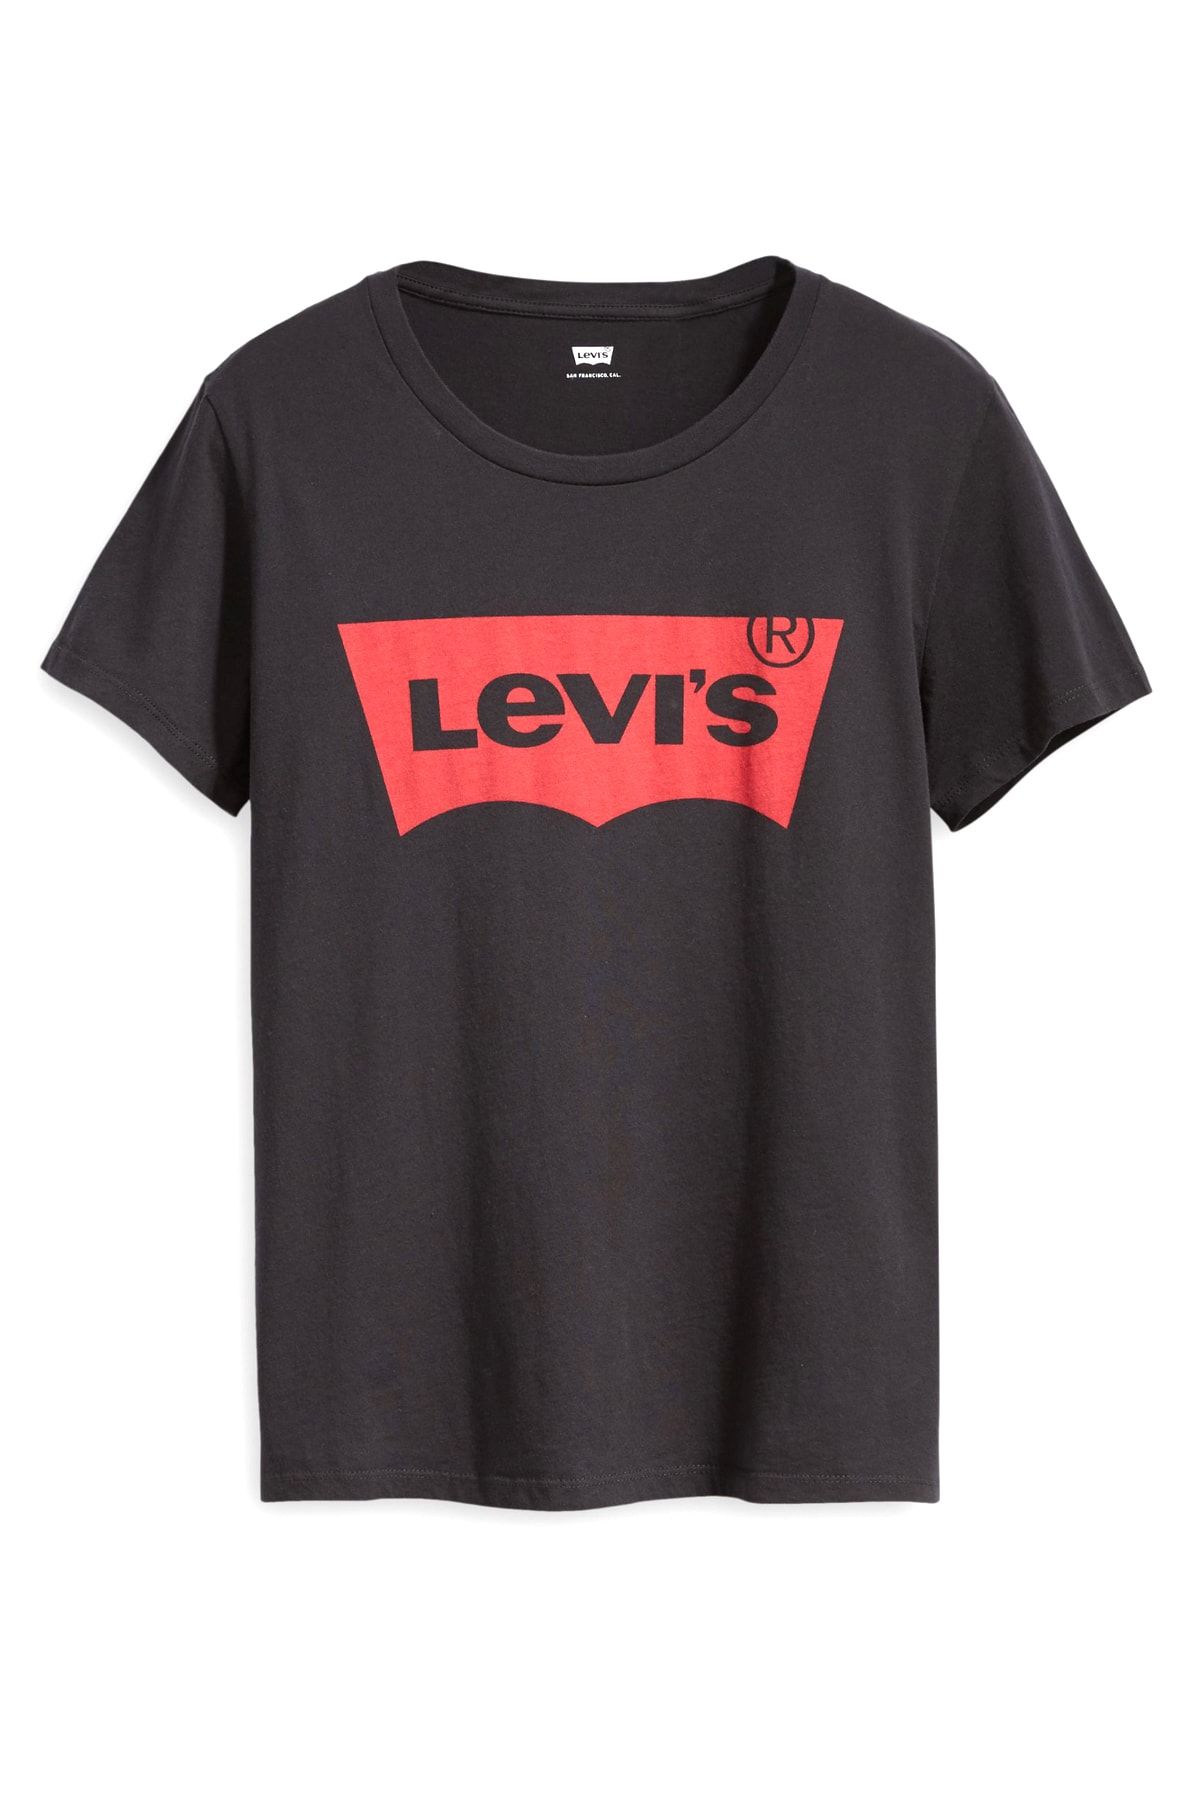 Levi's T-Shirt - Black - Regular fit - Trendyol